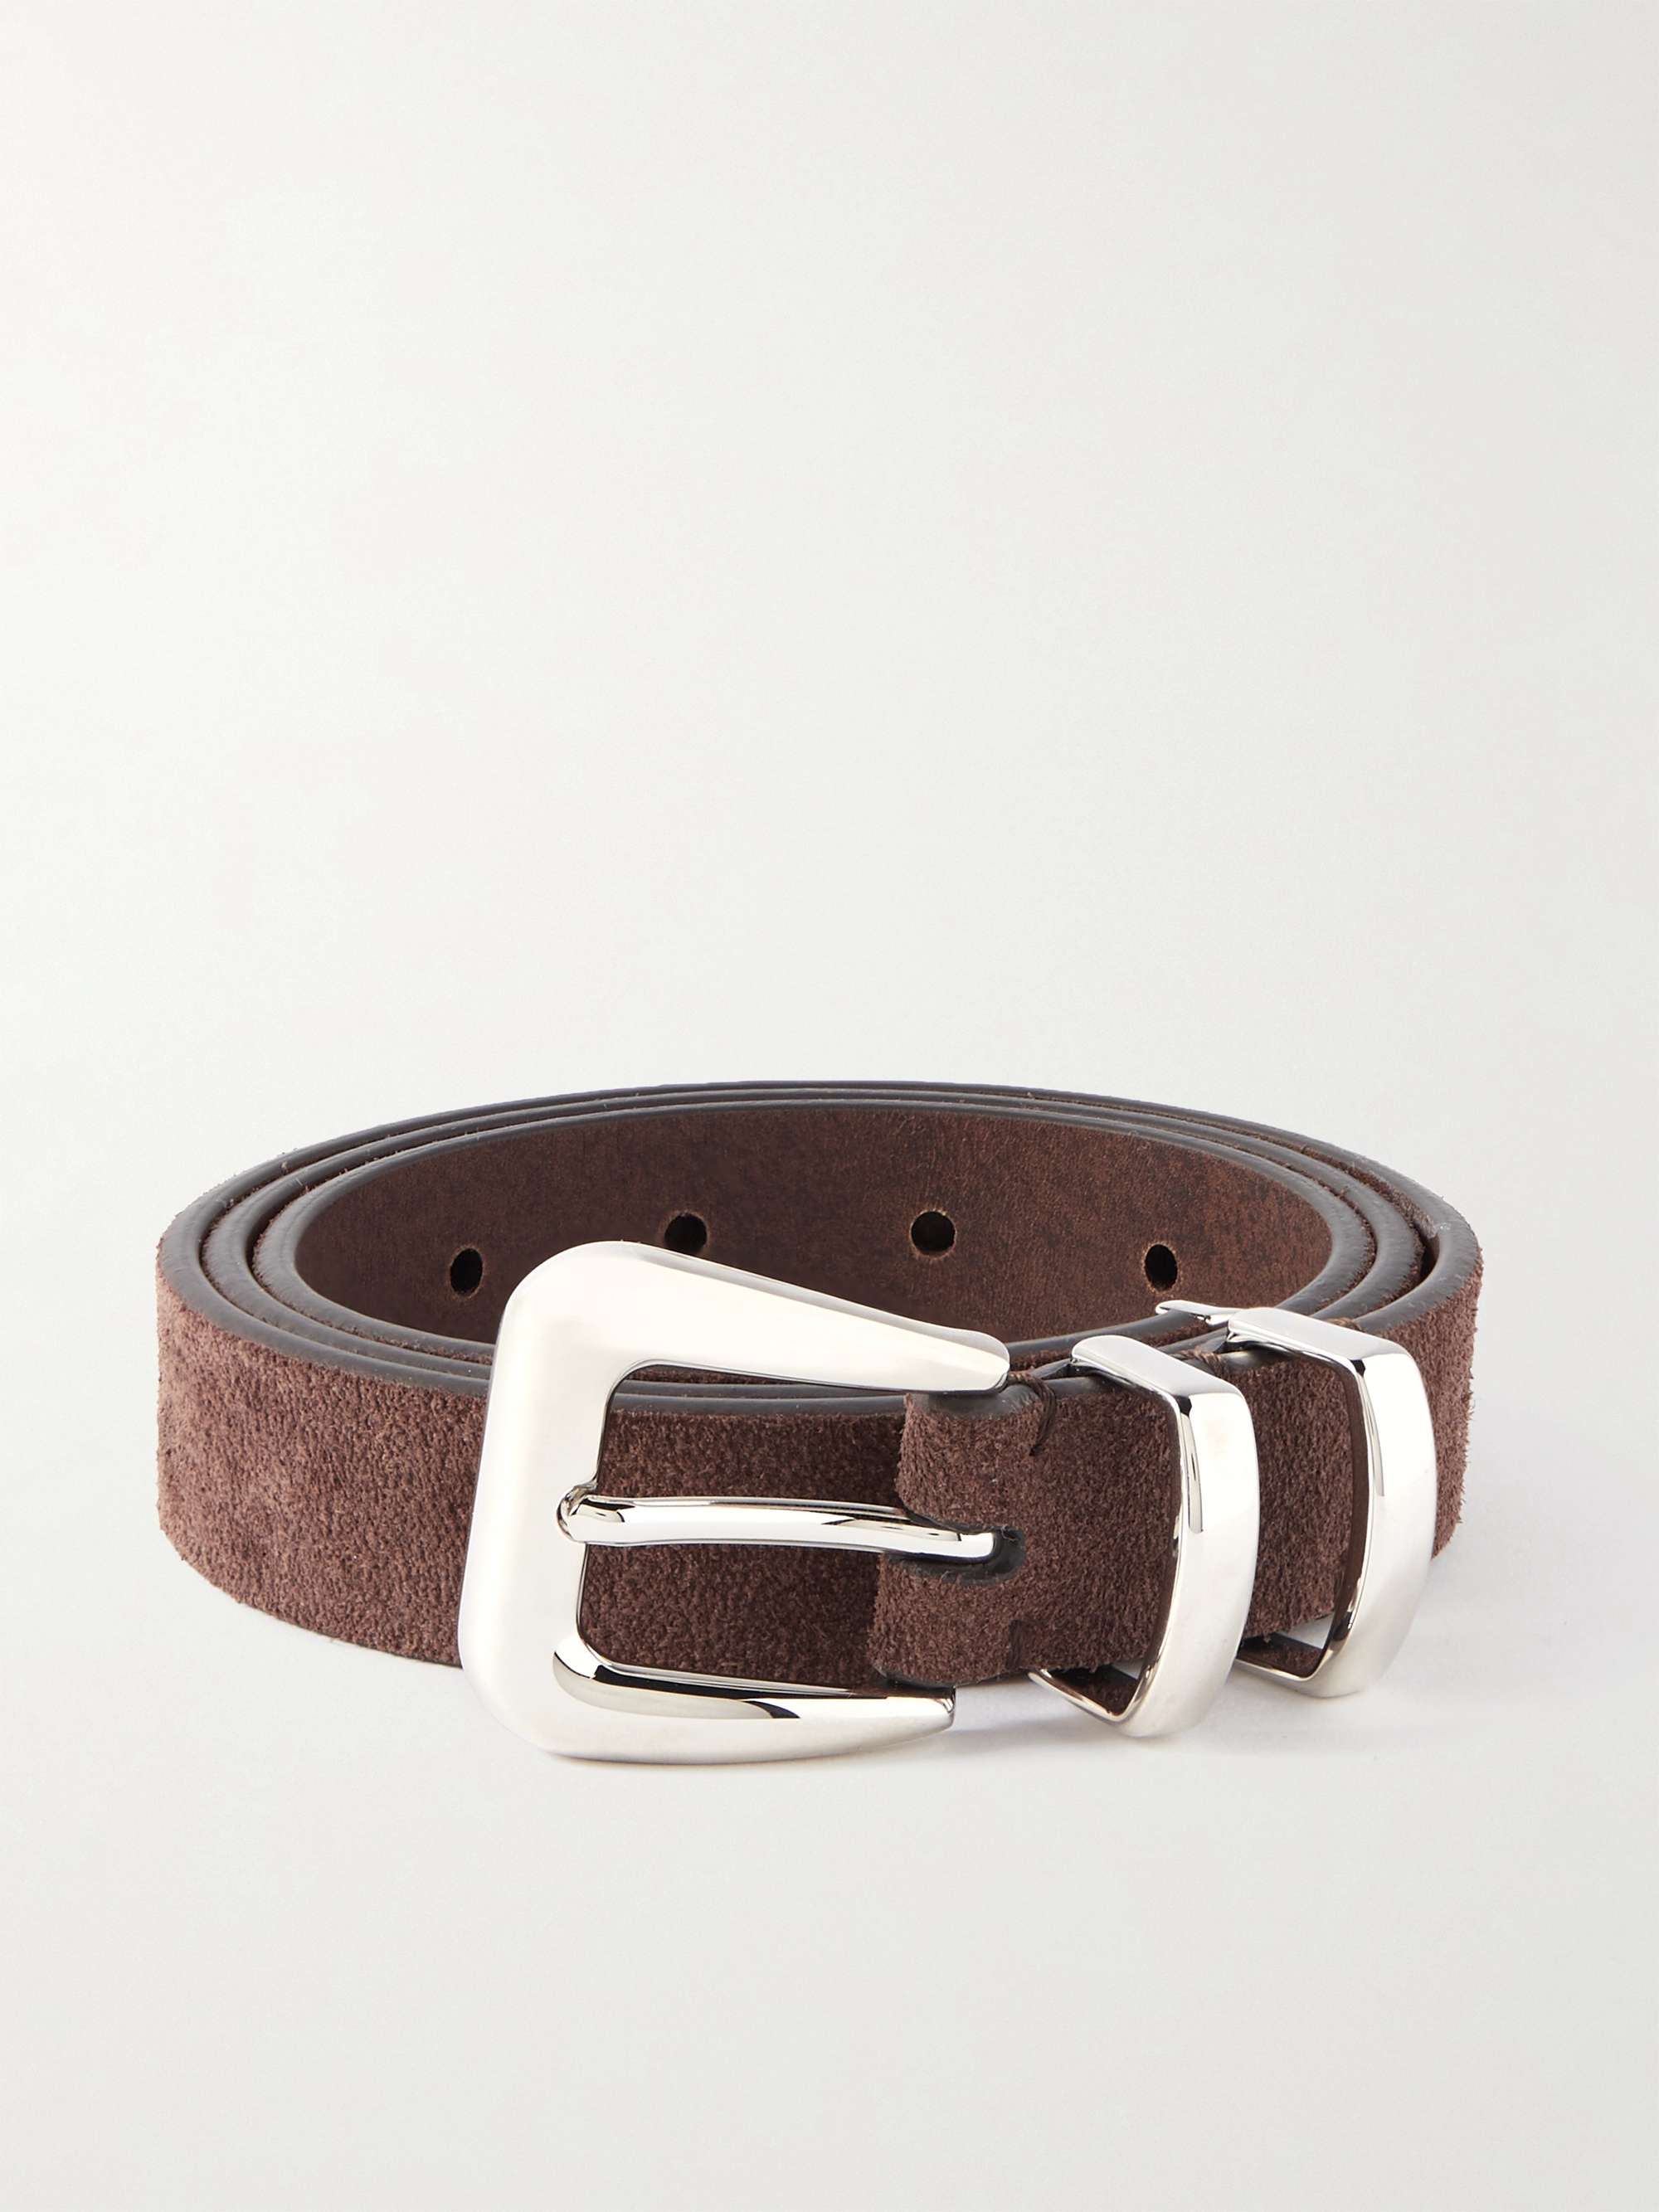 Brunello Cucinelli Men's Brown Suede Leather Belt W/ Silver Buckle NEW 